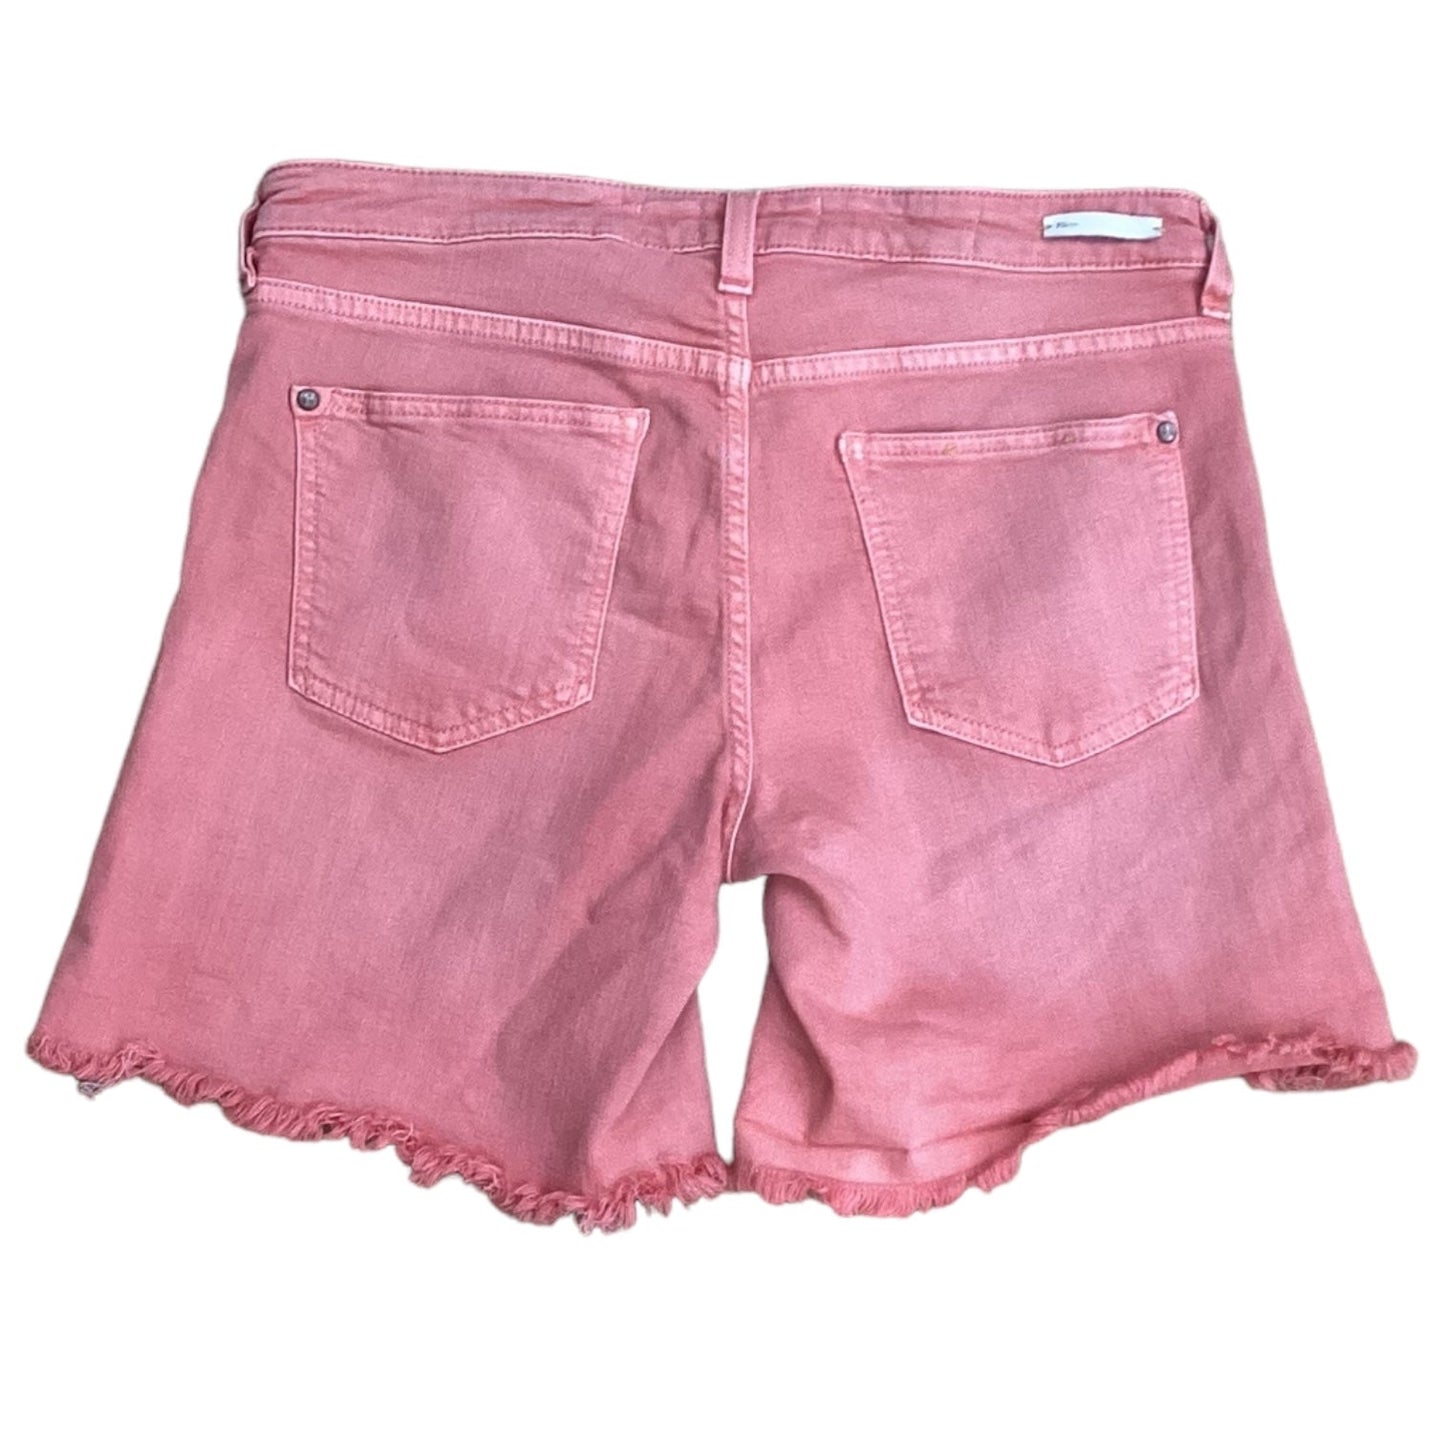 Pink Shorts Pilcro, Size 6